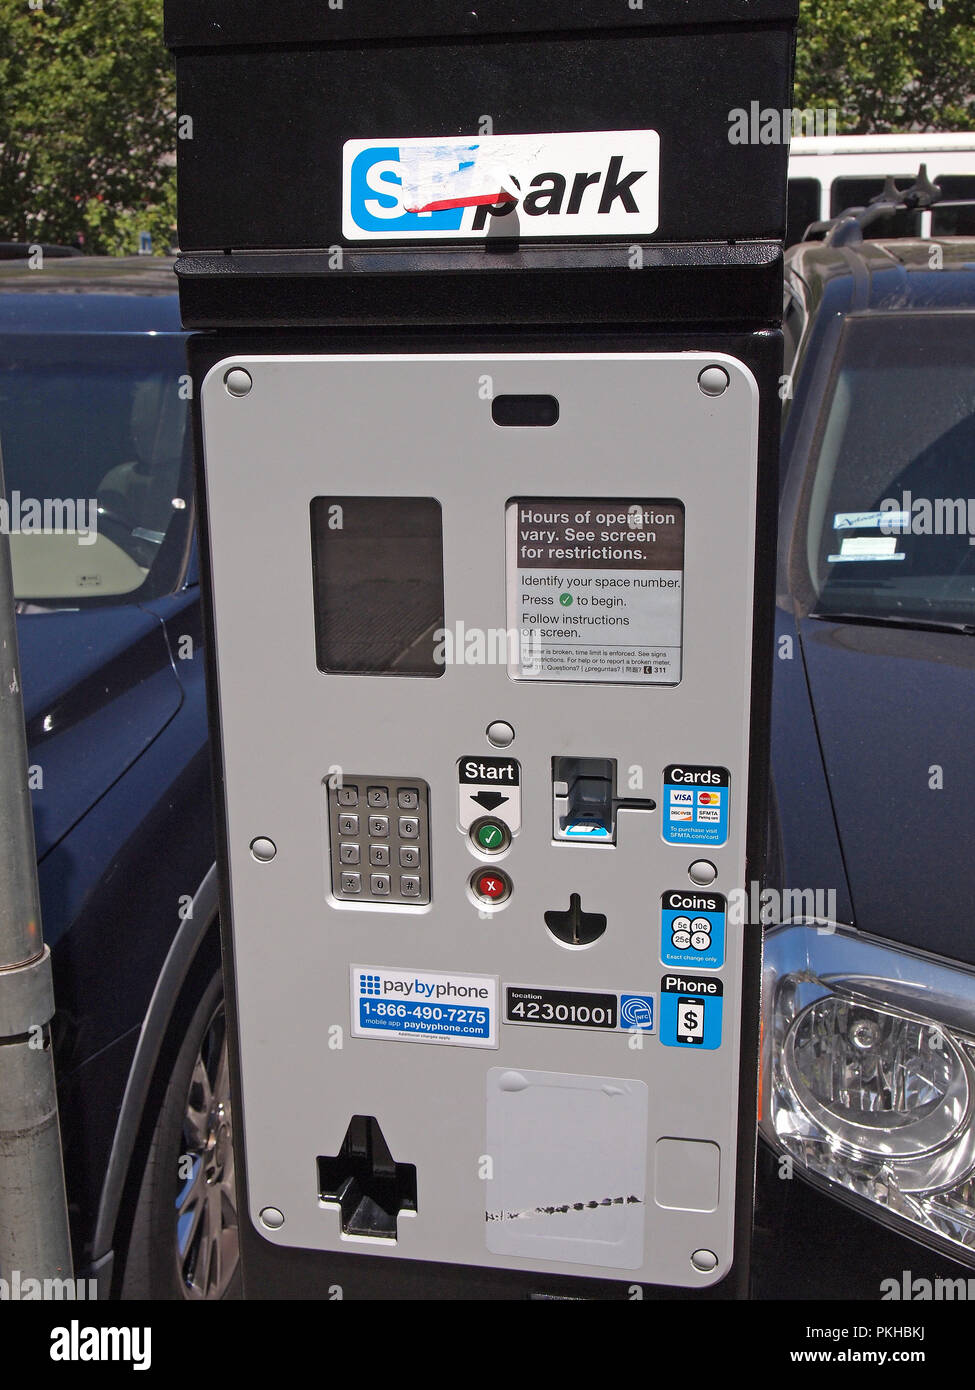 SFPark multi-space parking meter in San Francisco Civic Center, California Stock Photo